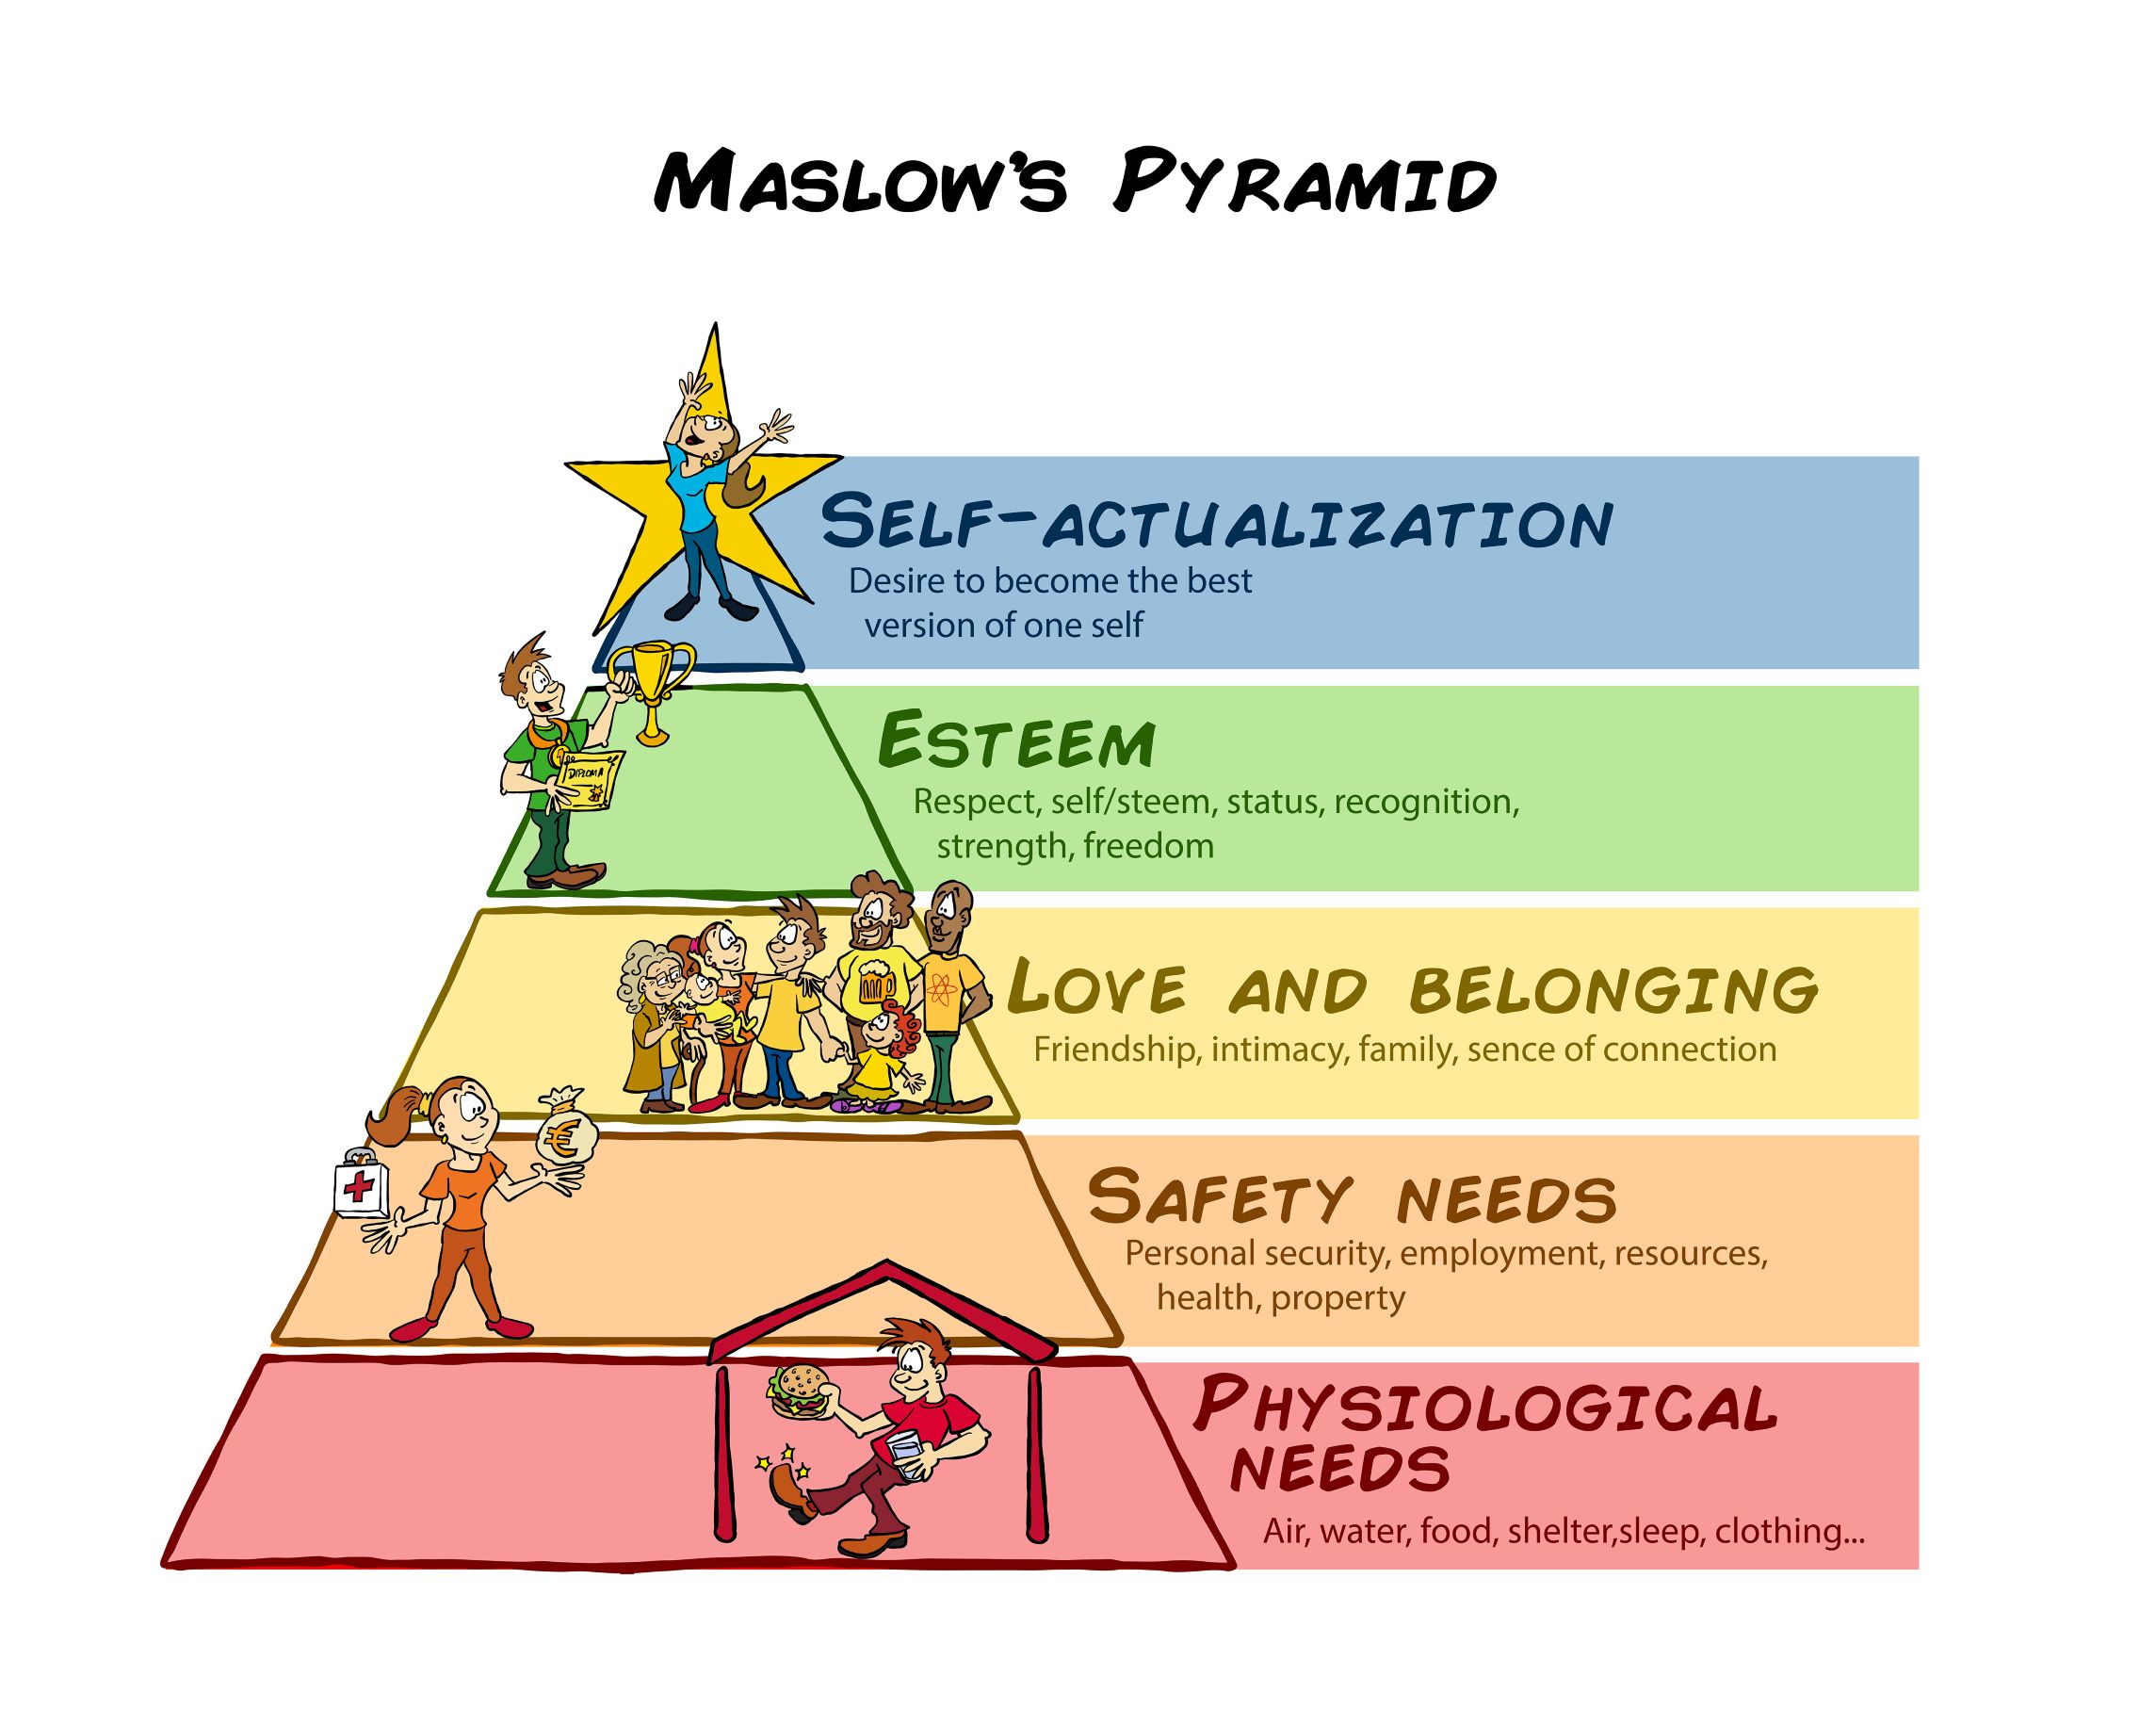 Maslow’s Pyramid